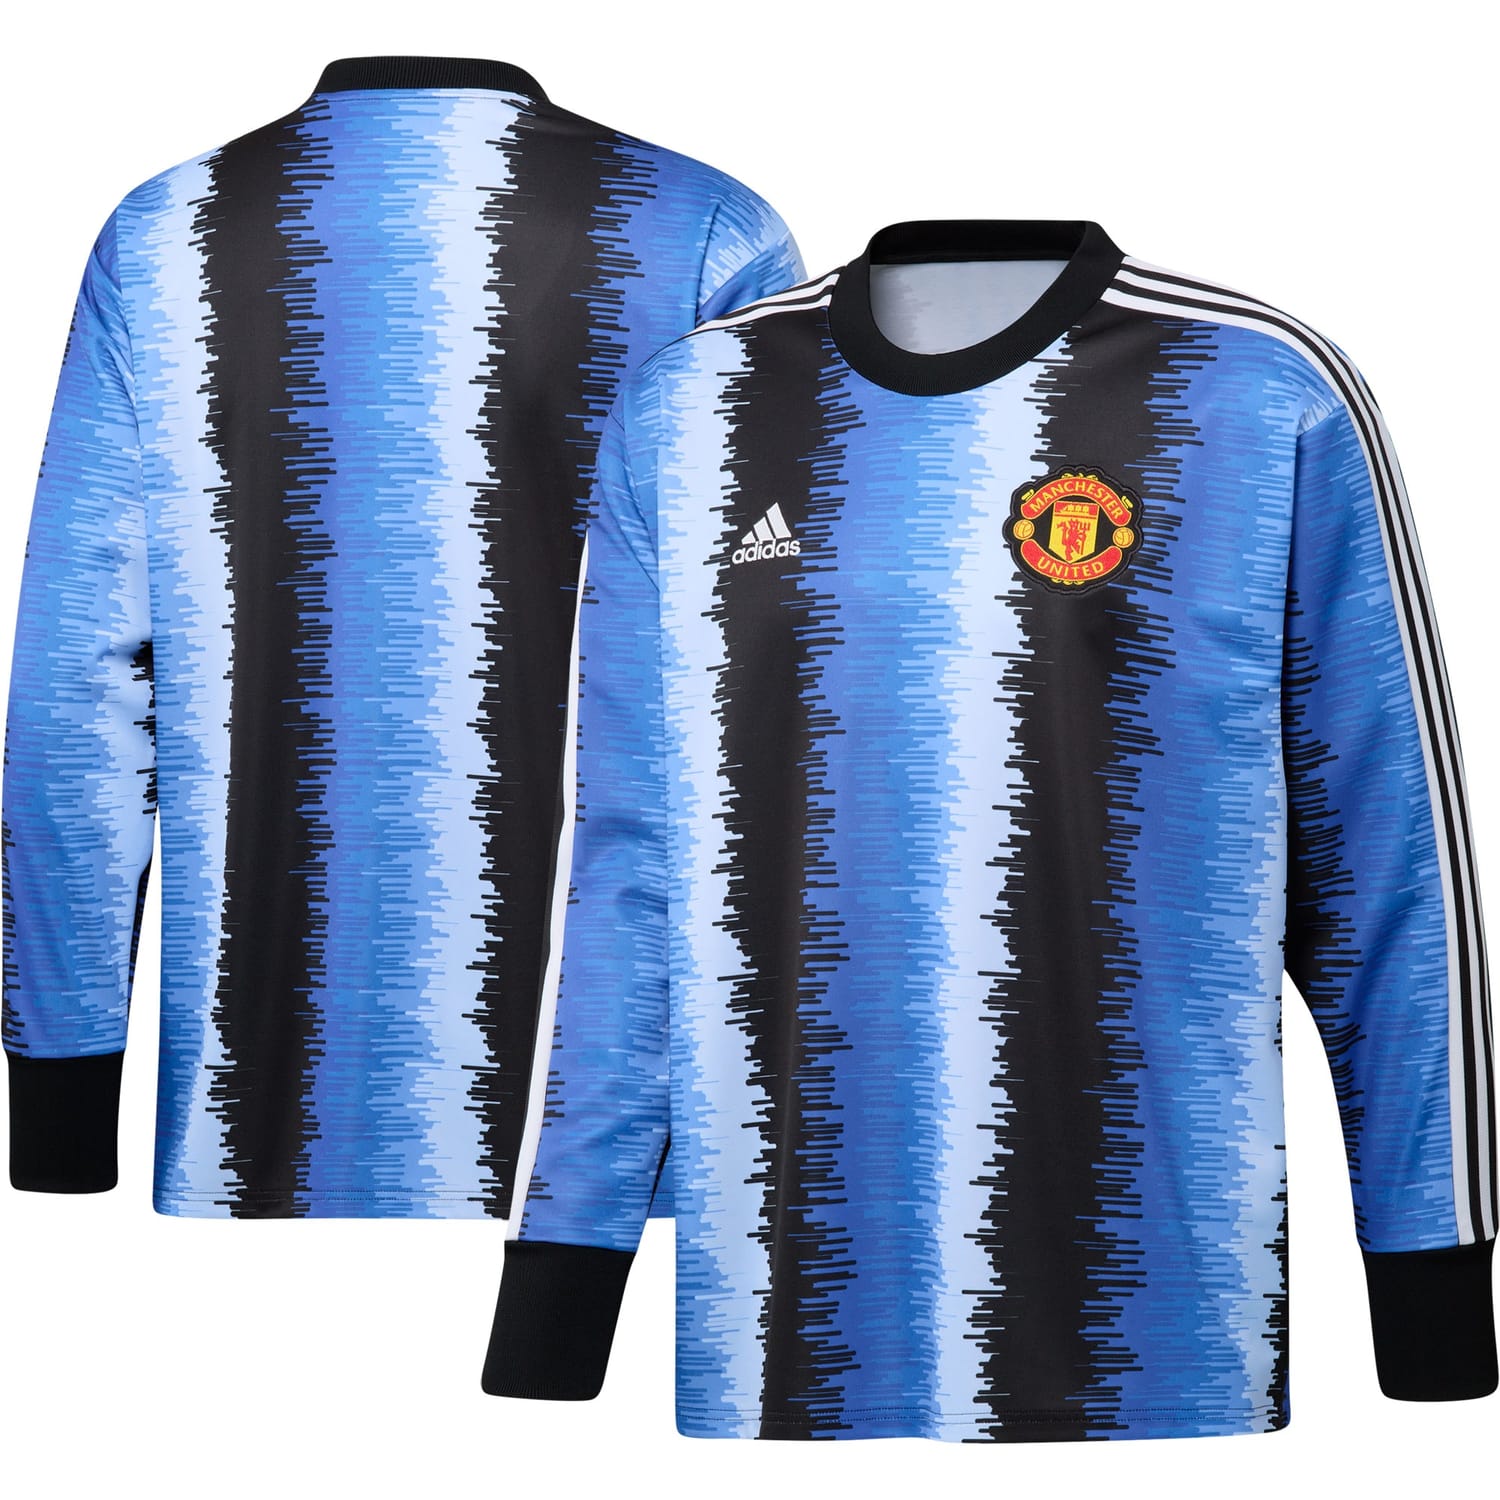 Premier League Manchester United Goalkeeper Authentic Jersey Shirt Black for Men